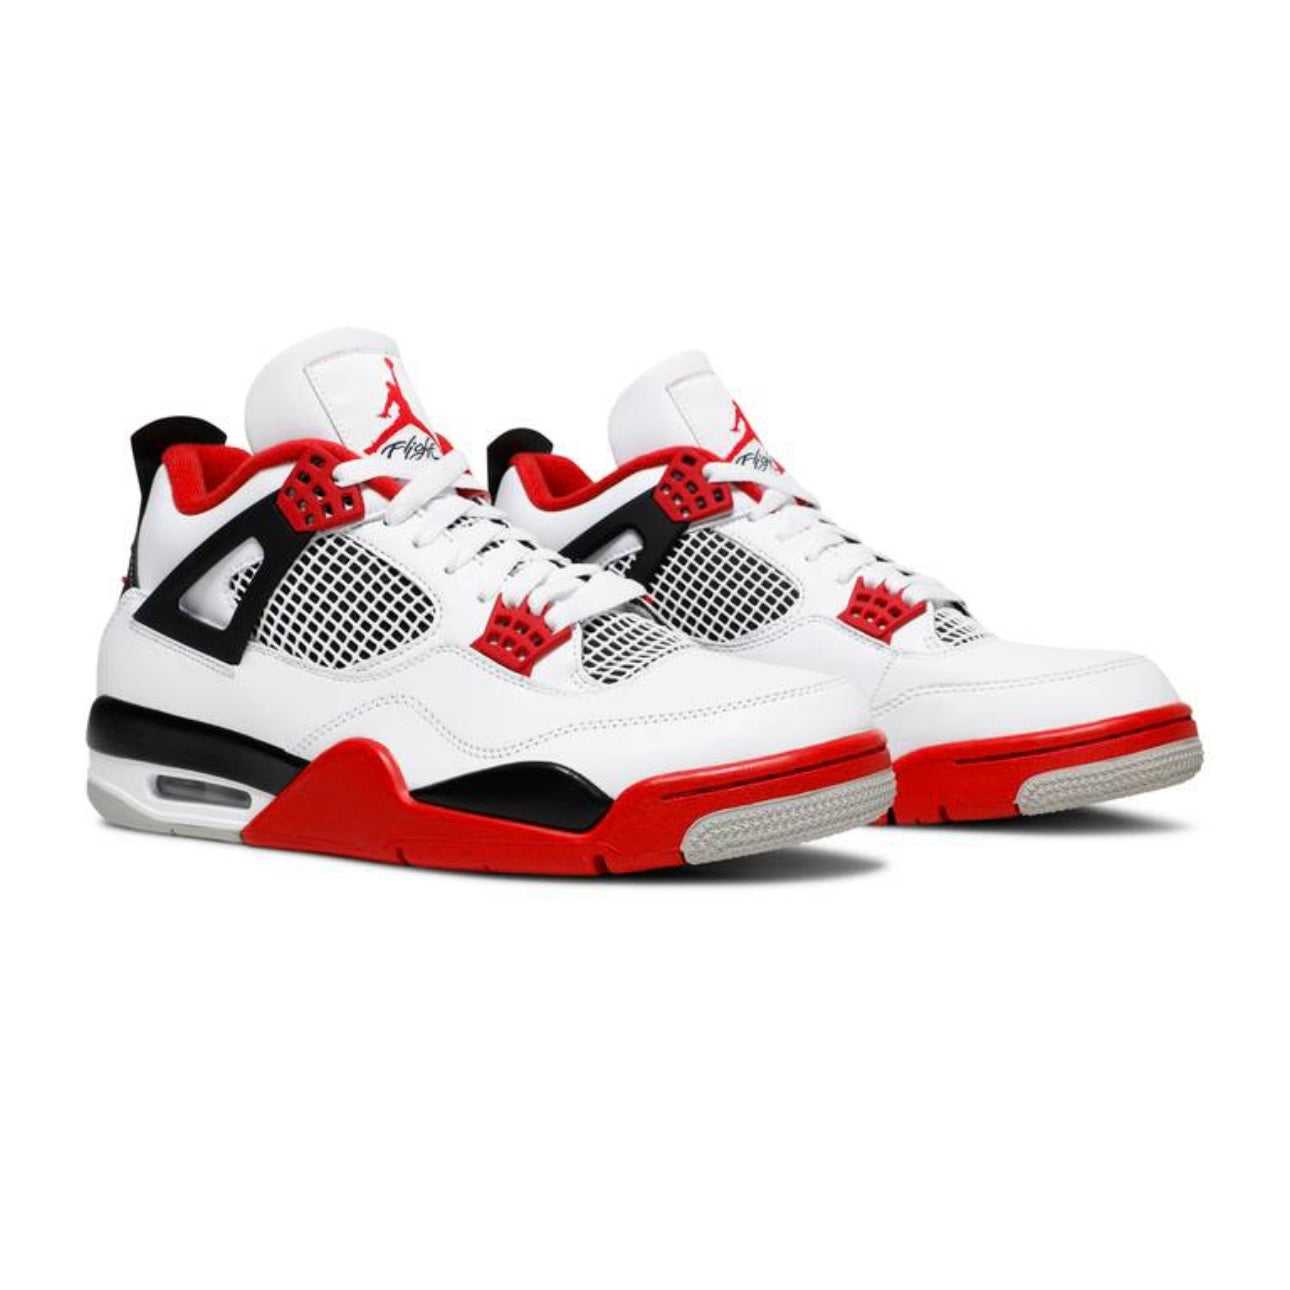 Air Jordan Retro 4 "Fire Red" [2020]